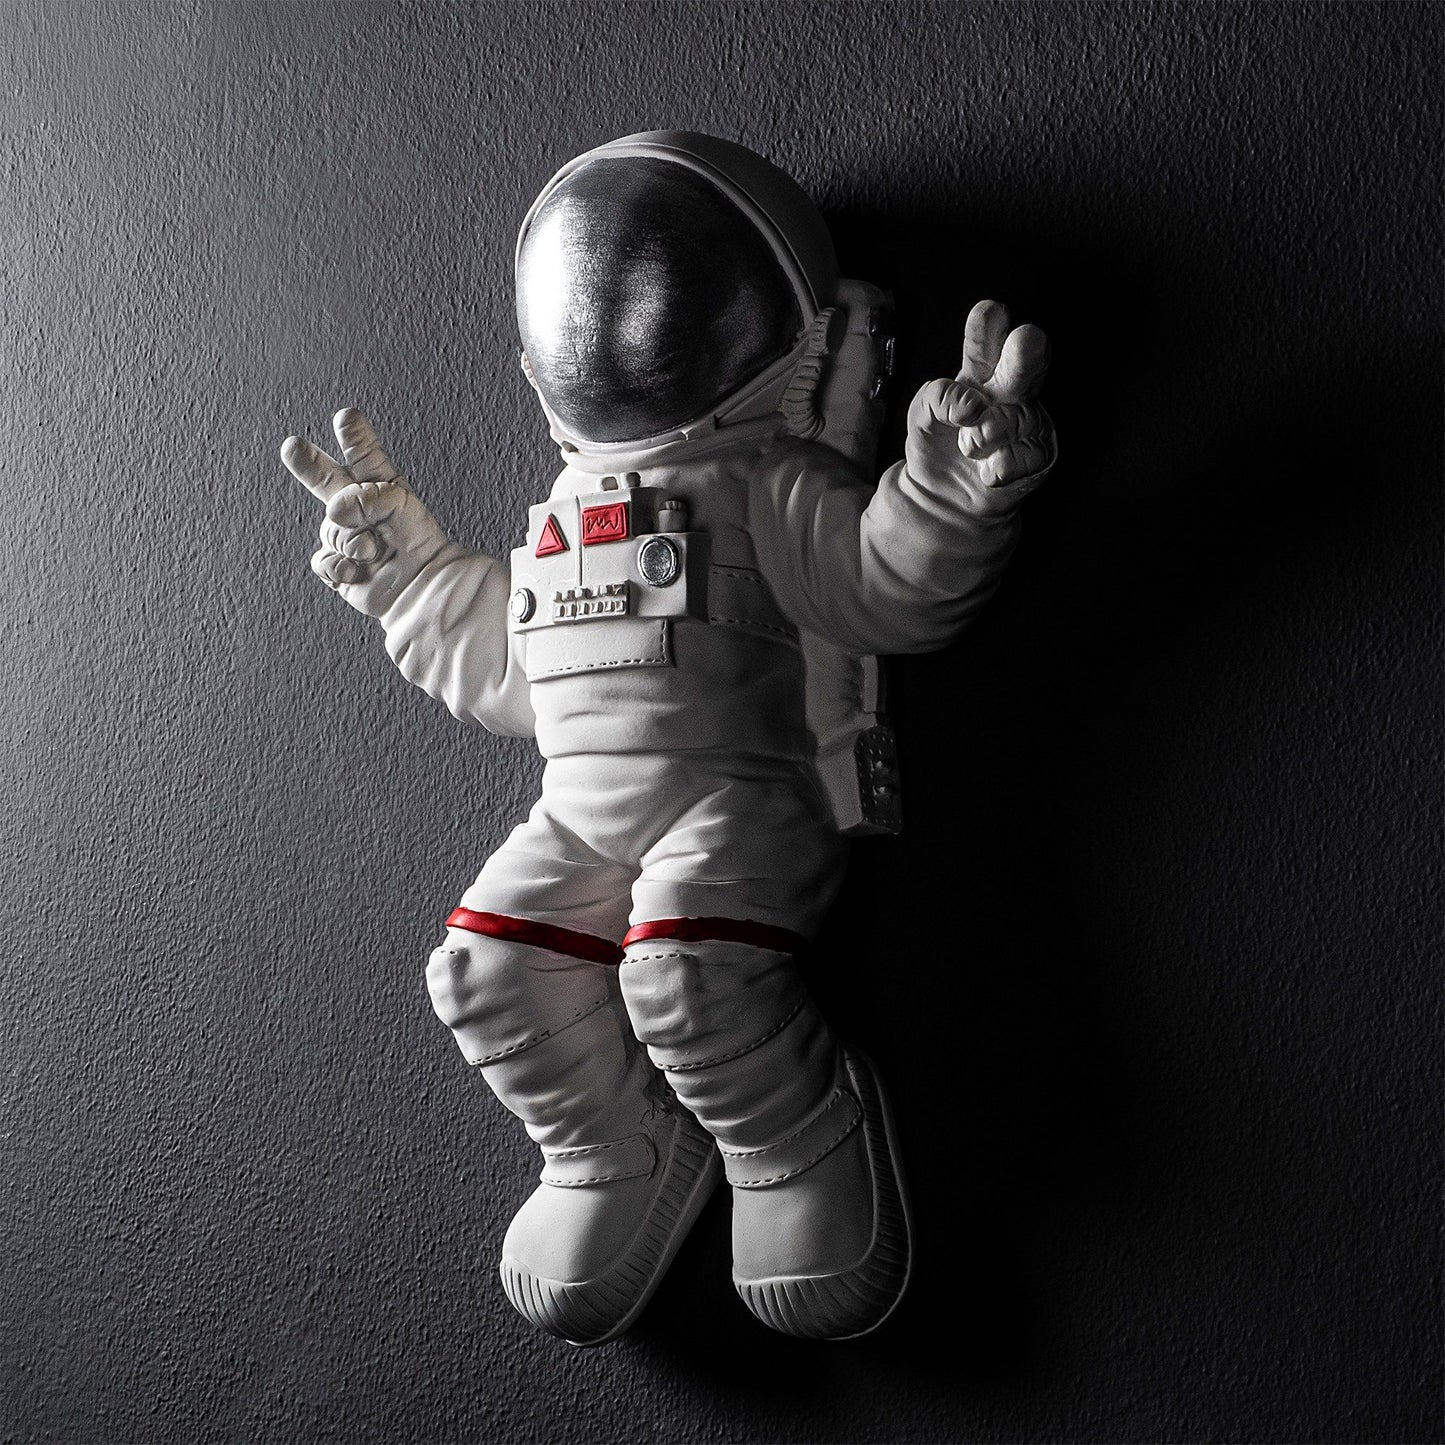 Fredstegn Astronaut - 2 - Dekorativt objekt